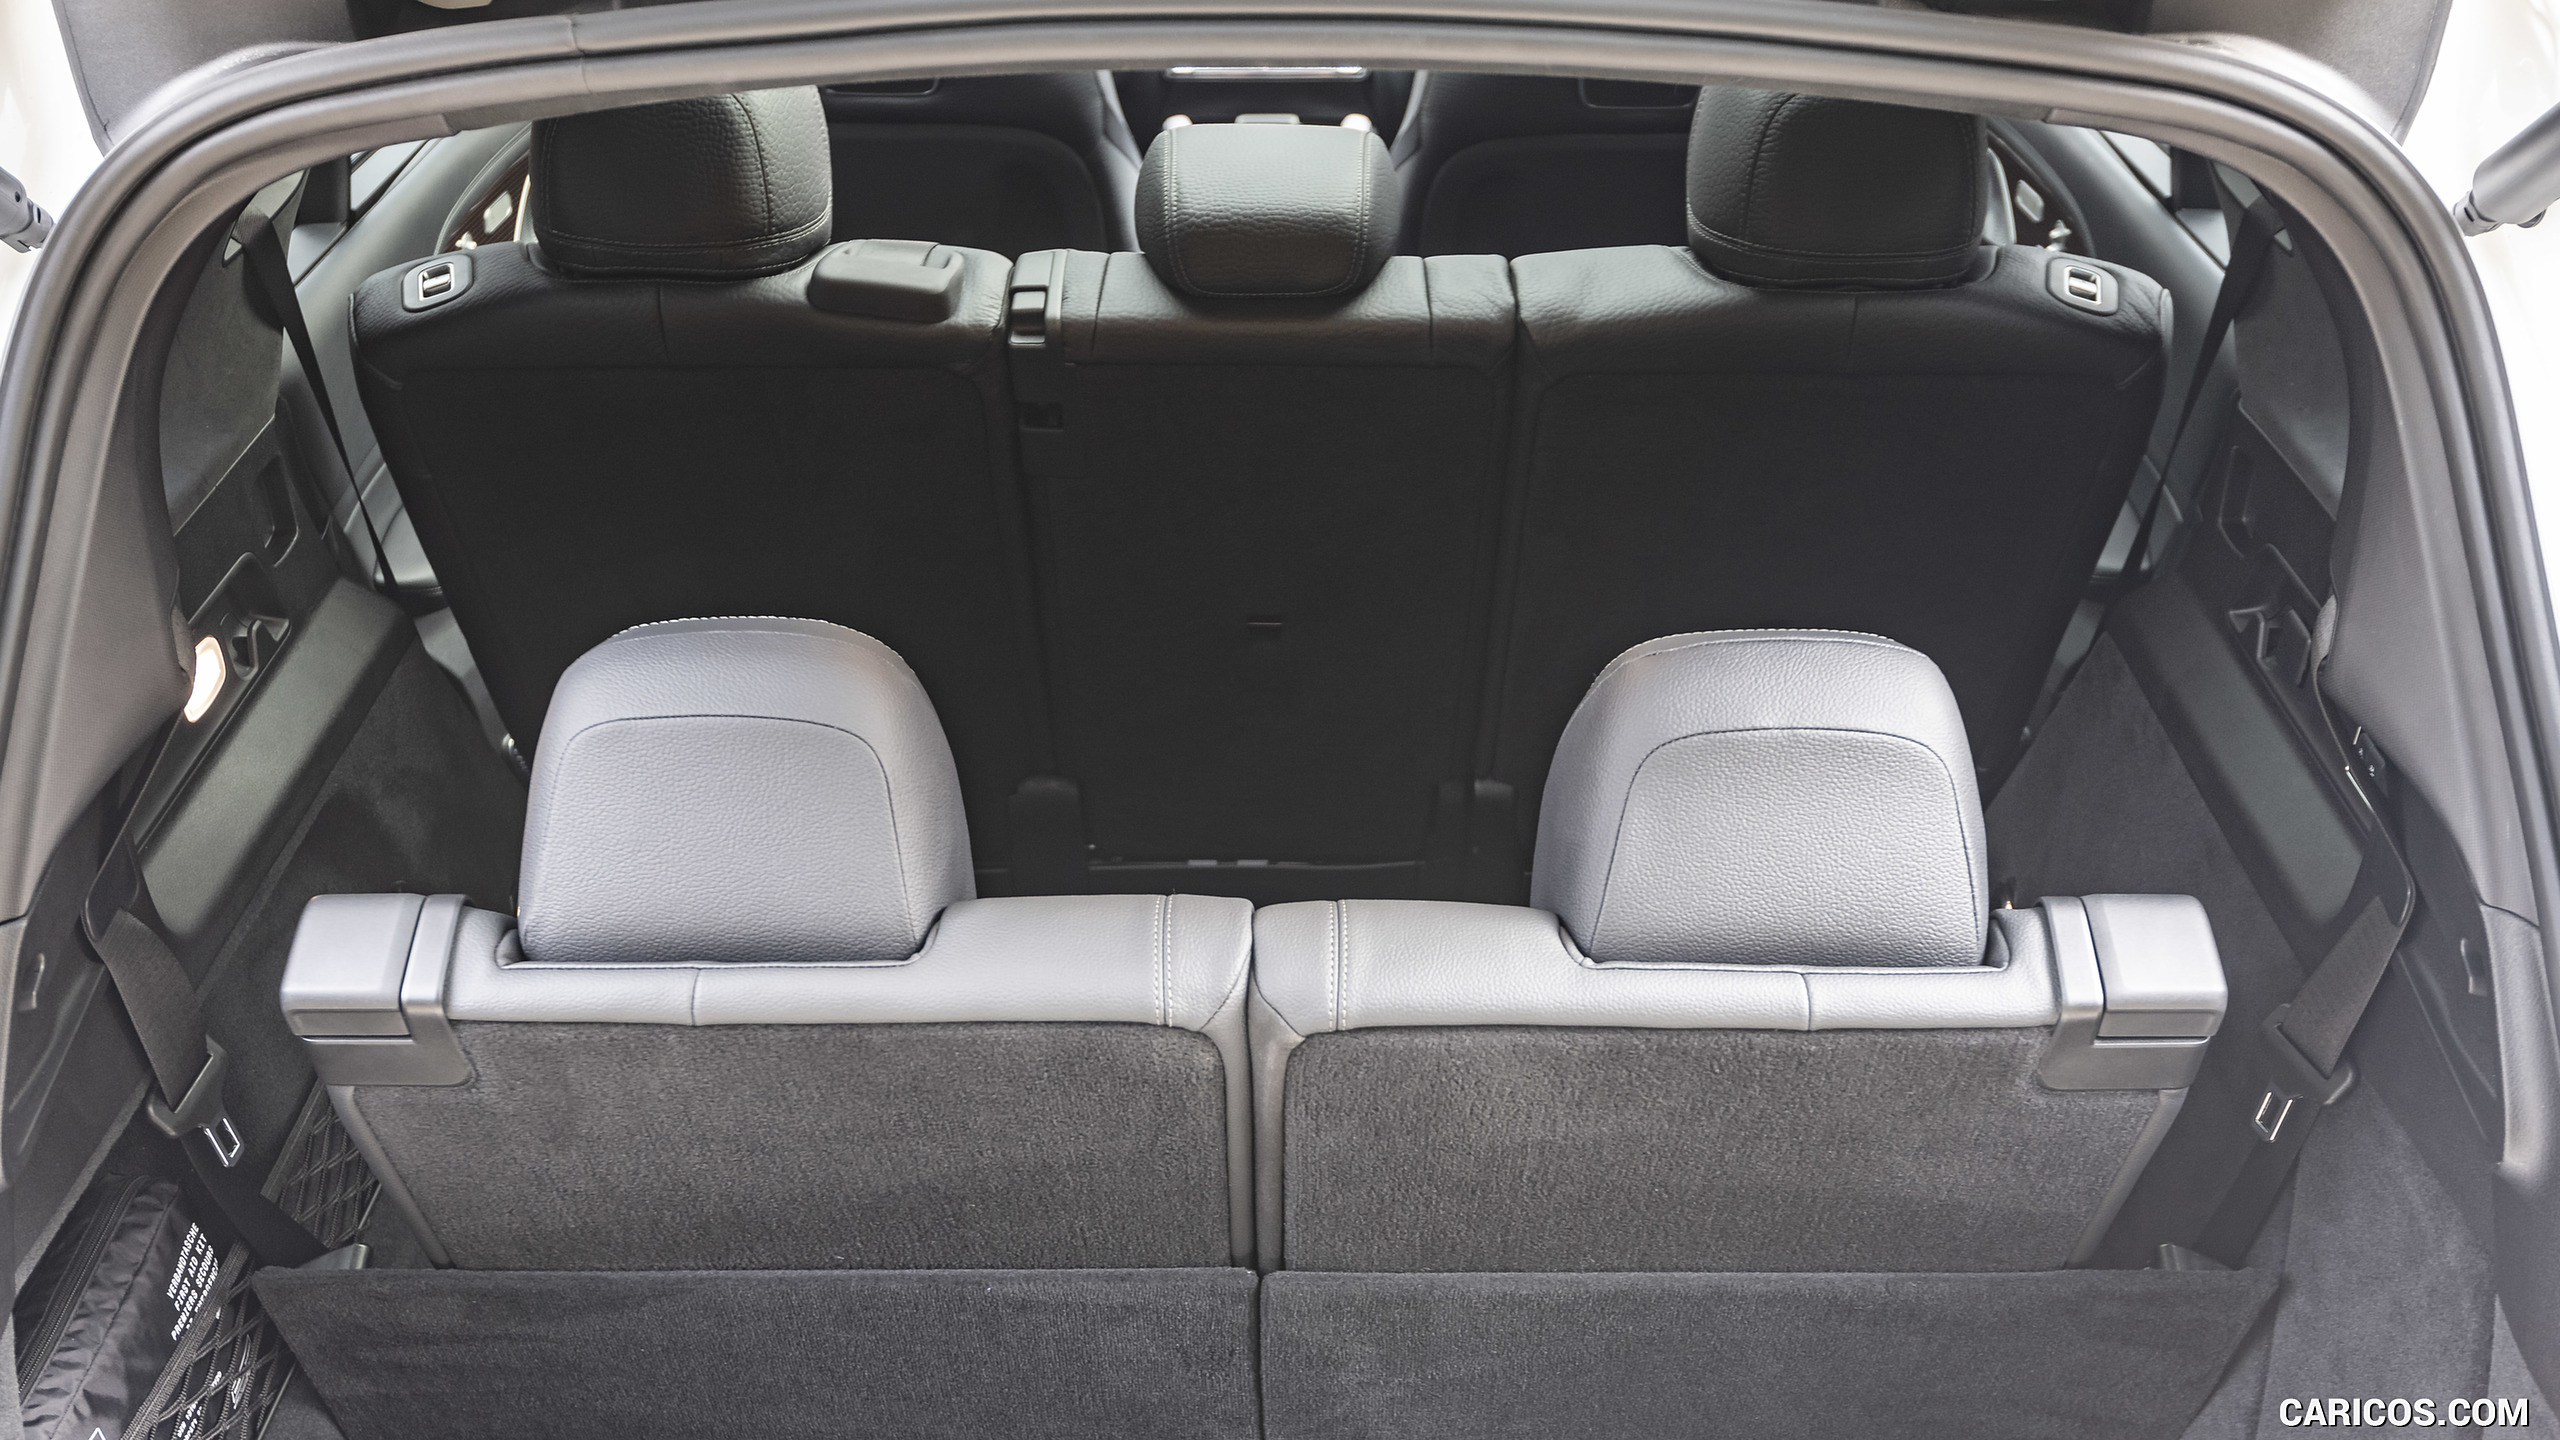 2020 Mercedes-Benz GLE 450 4MATIC (Color: Designo Diamond White Bright; US-Spec) - Interior, Third Row Seats, #179 of 358